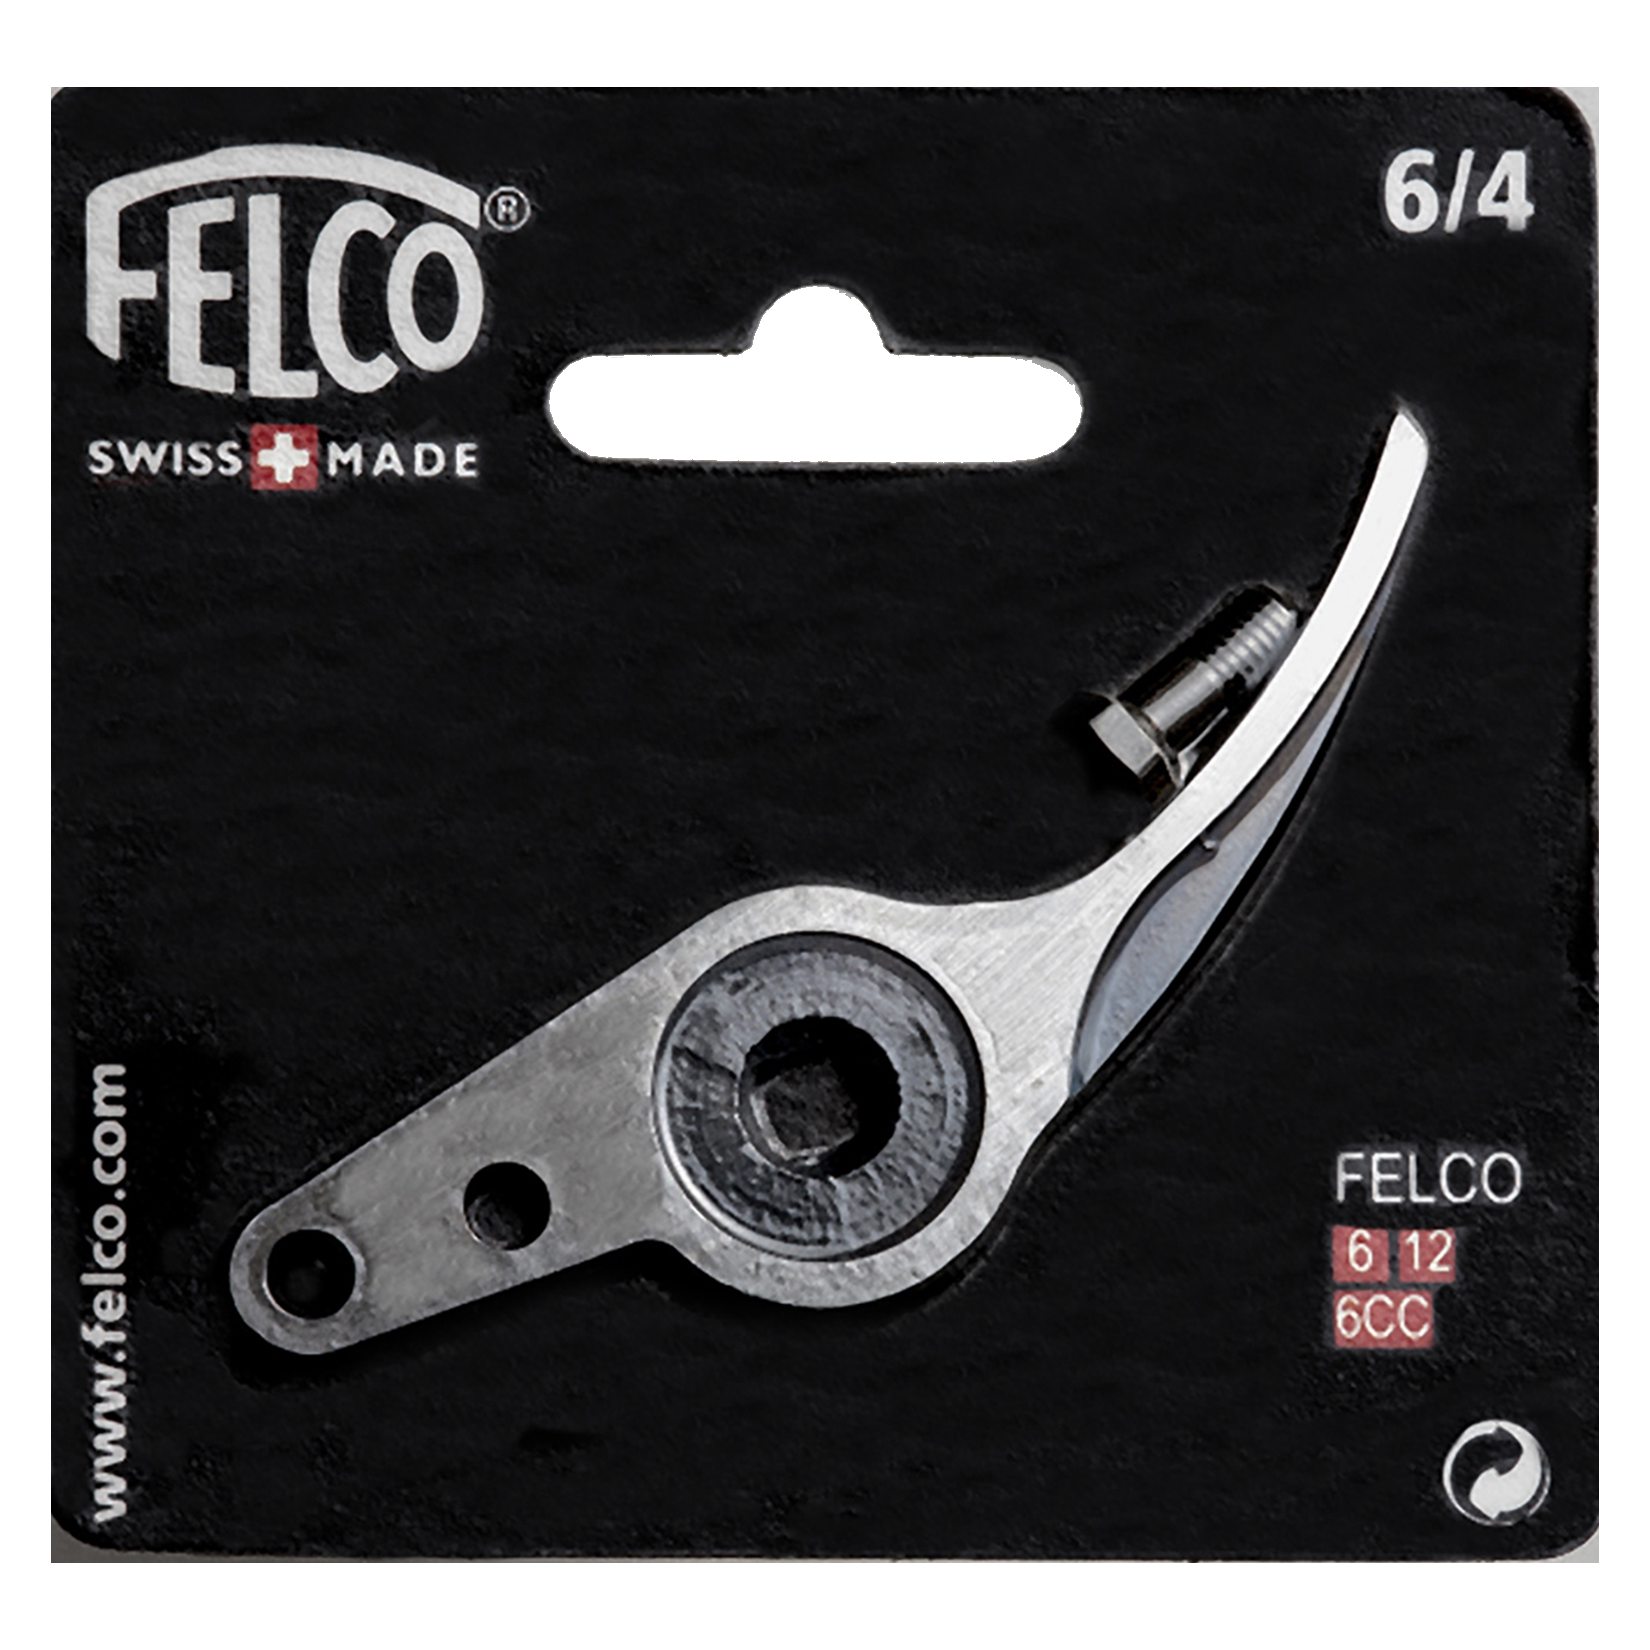 Felco Anvil blade for Model 6 + 12 secateurs blade + rivets p/n L21162 - sealed - official Felco stockist